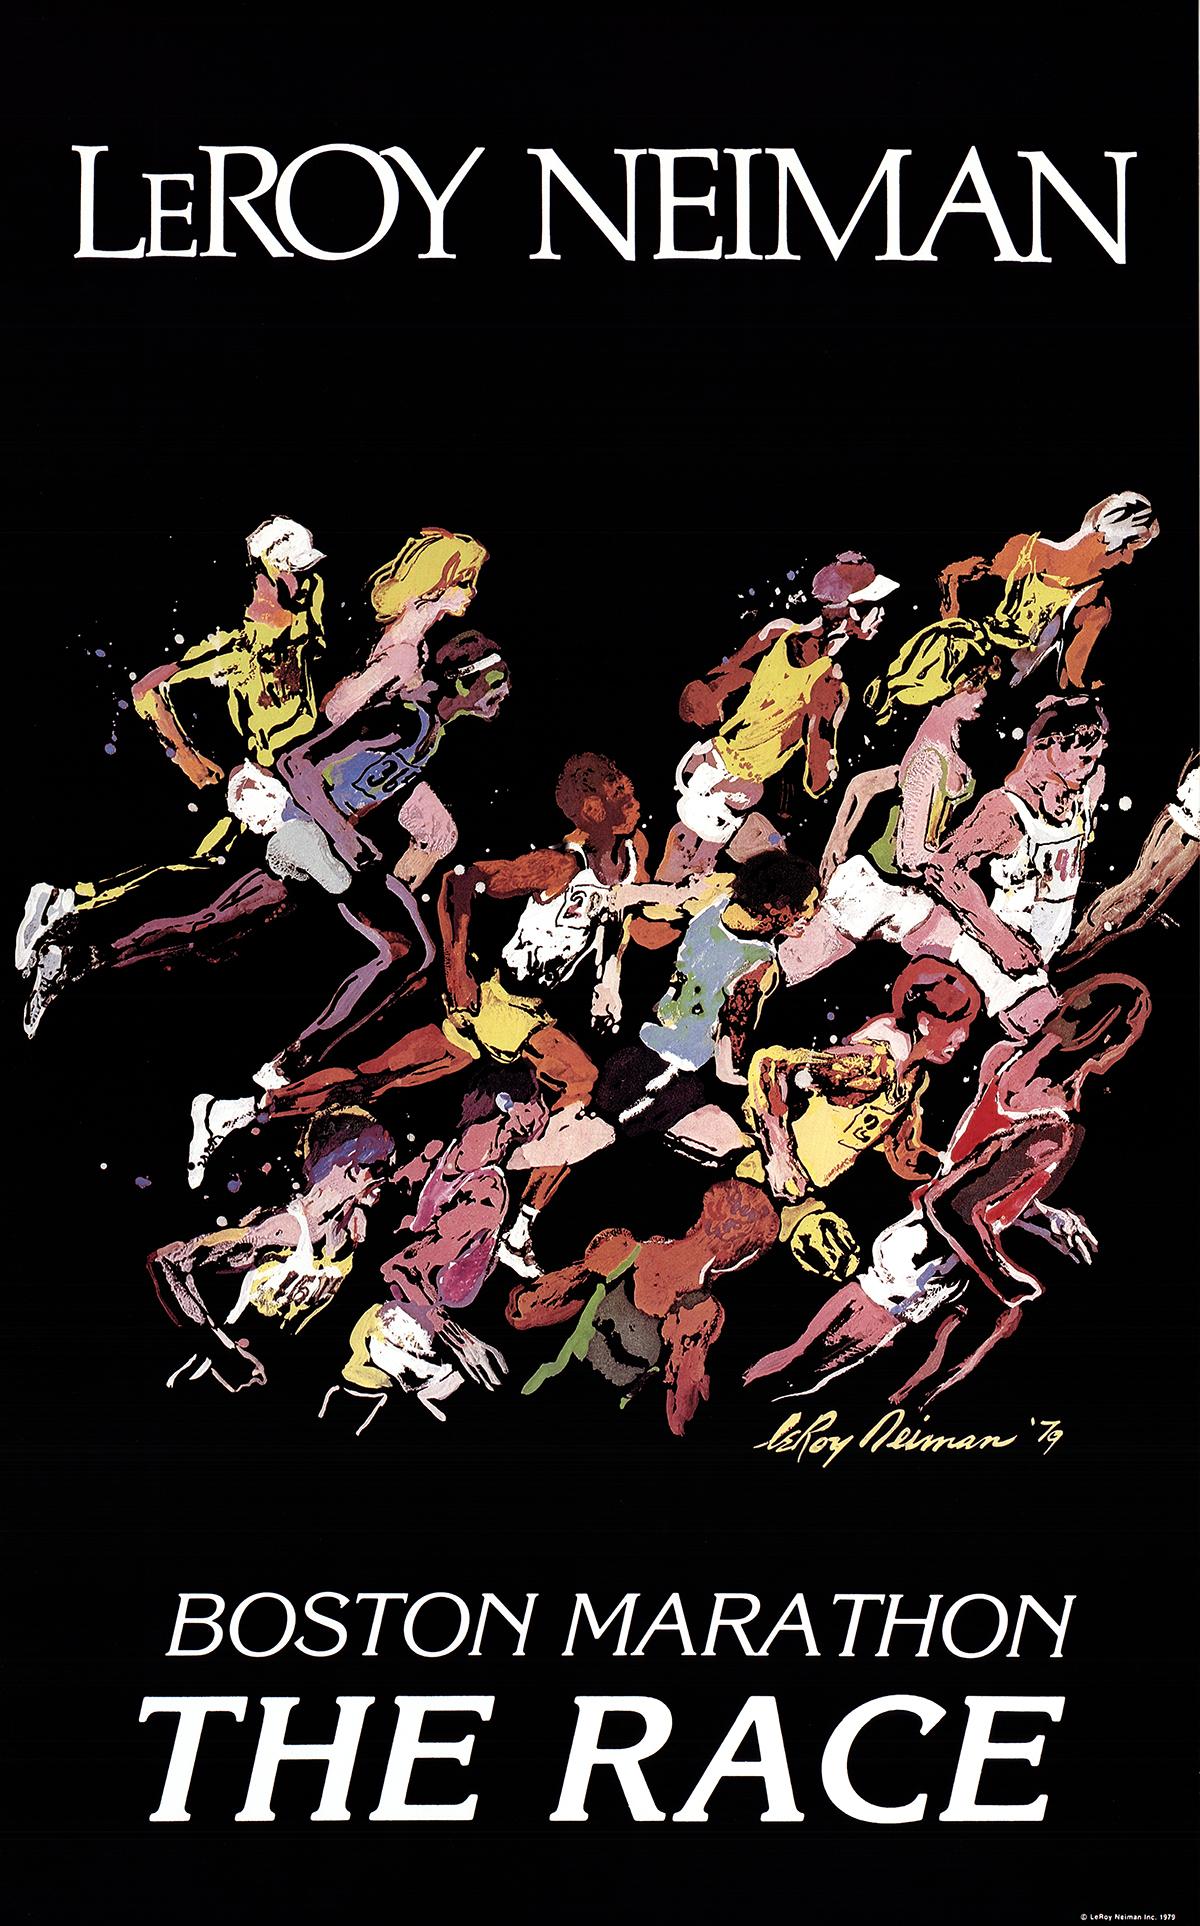 After LeRoy Neiman-Boston Marathon-38" x 23.5"-Poster-1979-Expressionism-Black - Print by Leroy Neiman